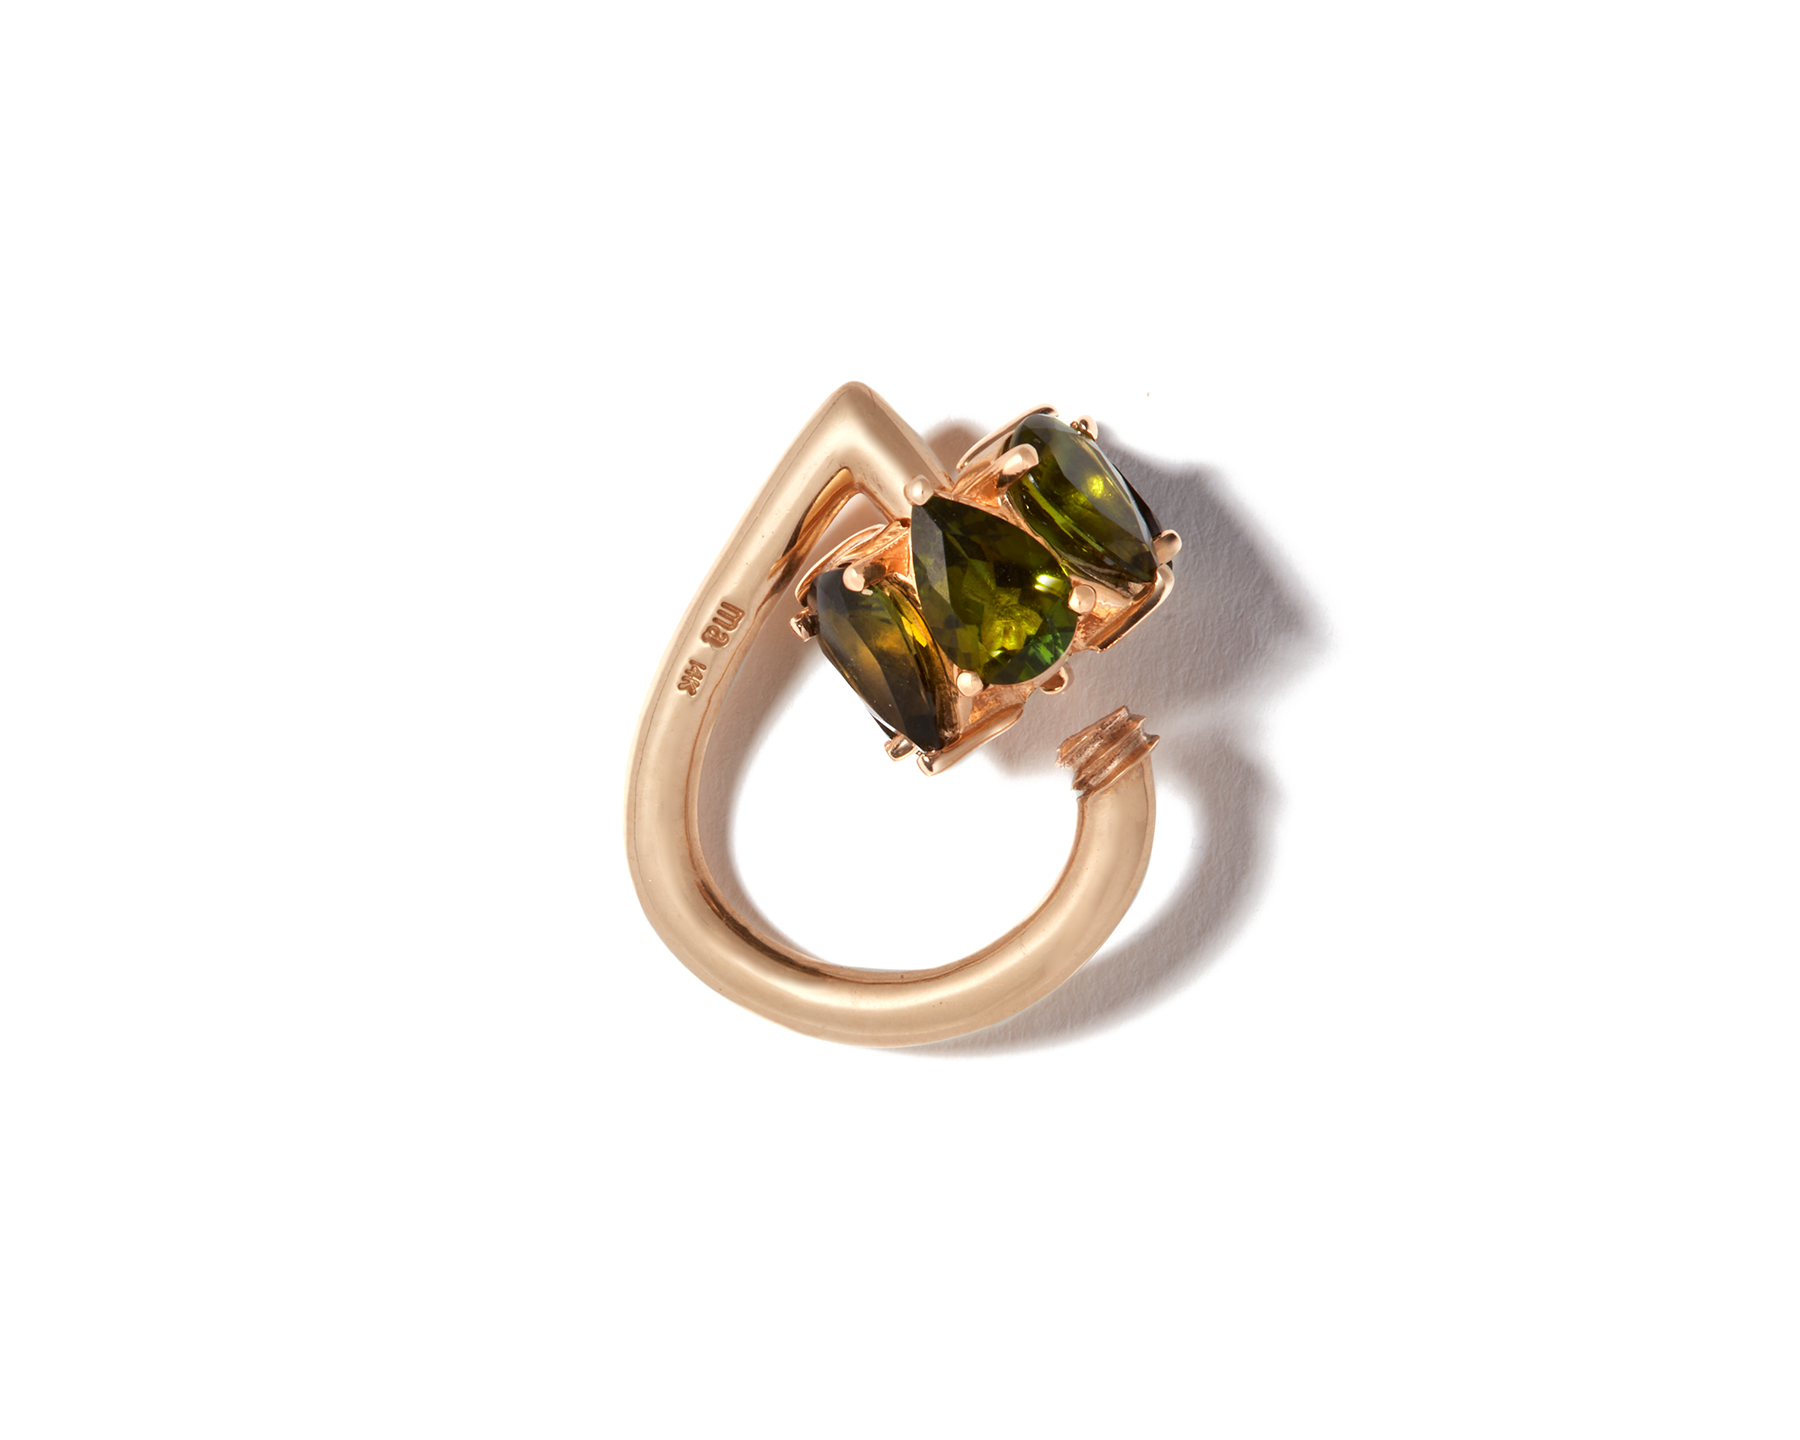 Gold drop gemstone jewelry lock with open green gemstone clasp